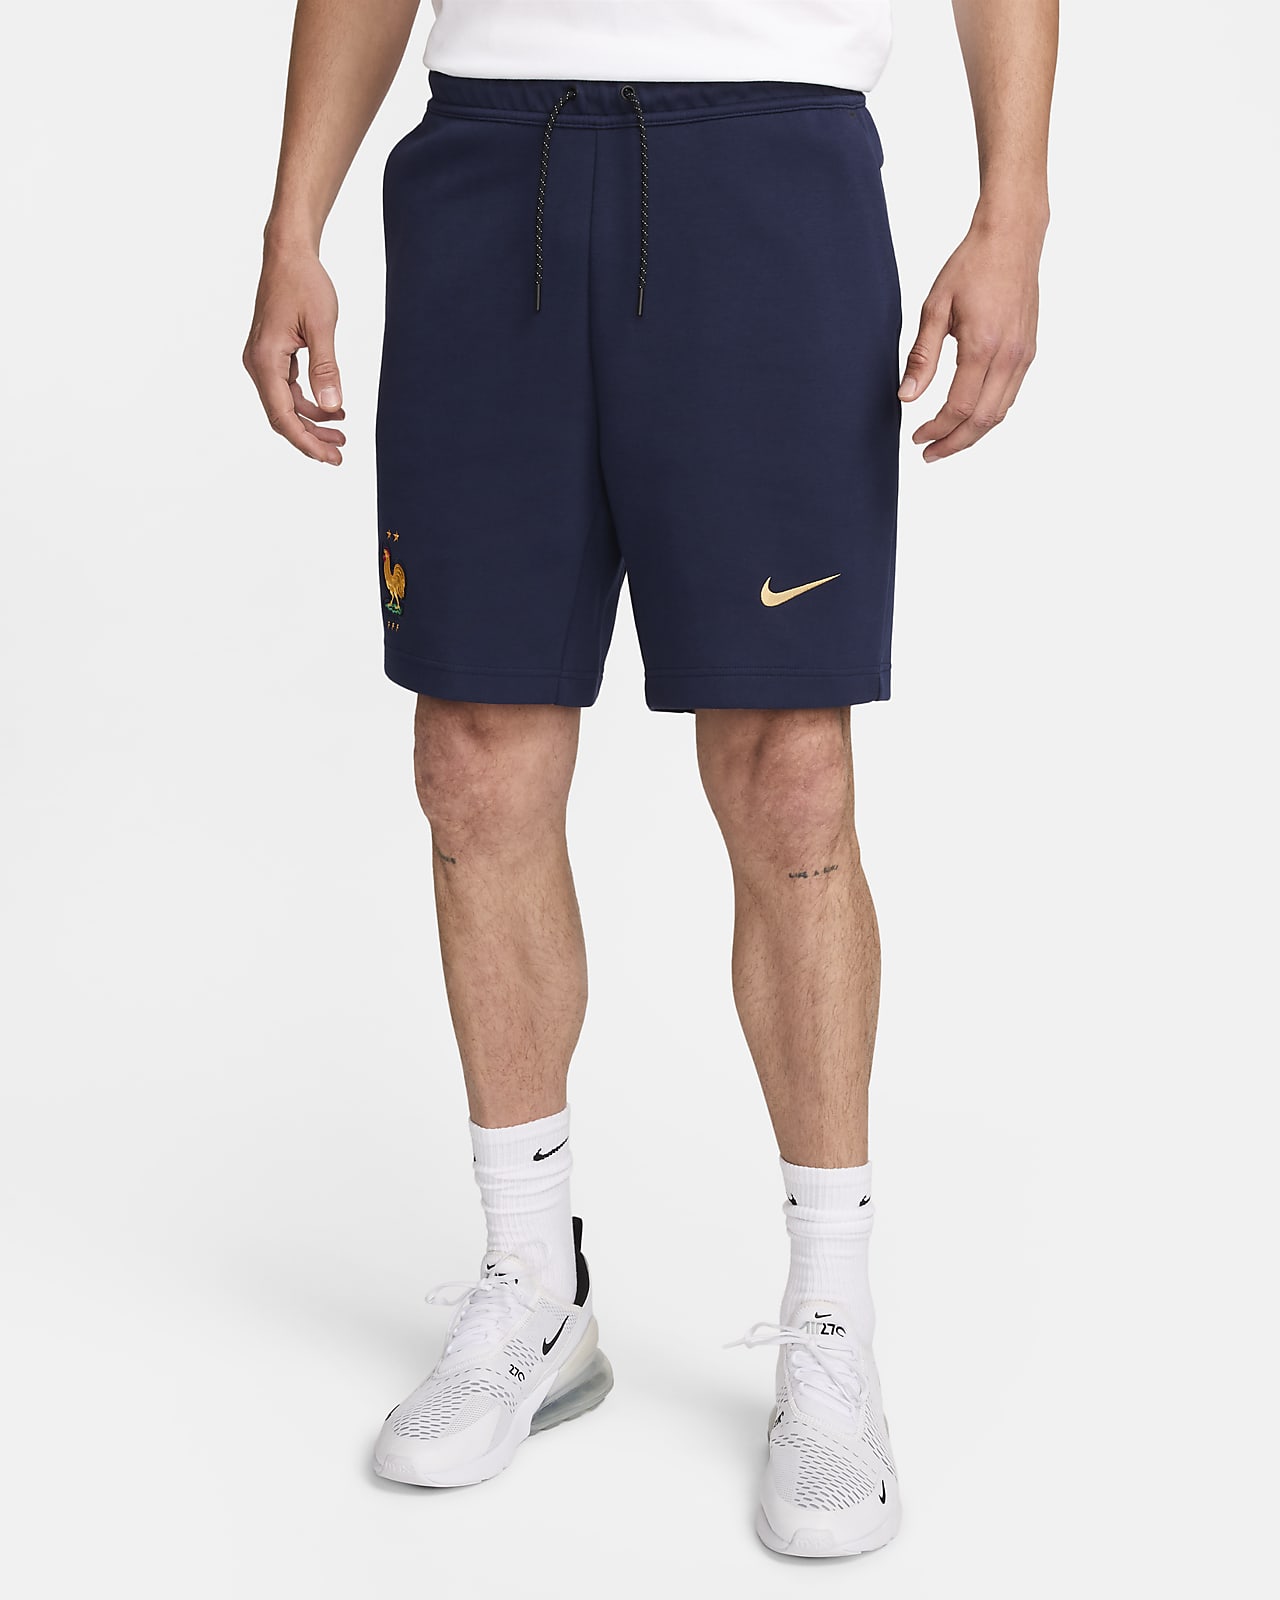 FFF Nike Sportswear Tech Fleece Pantalons curts - Home